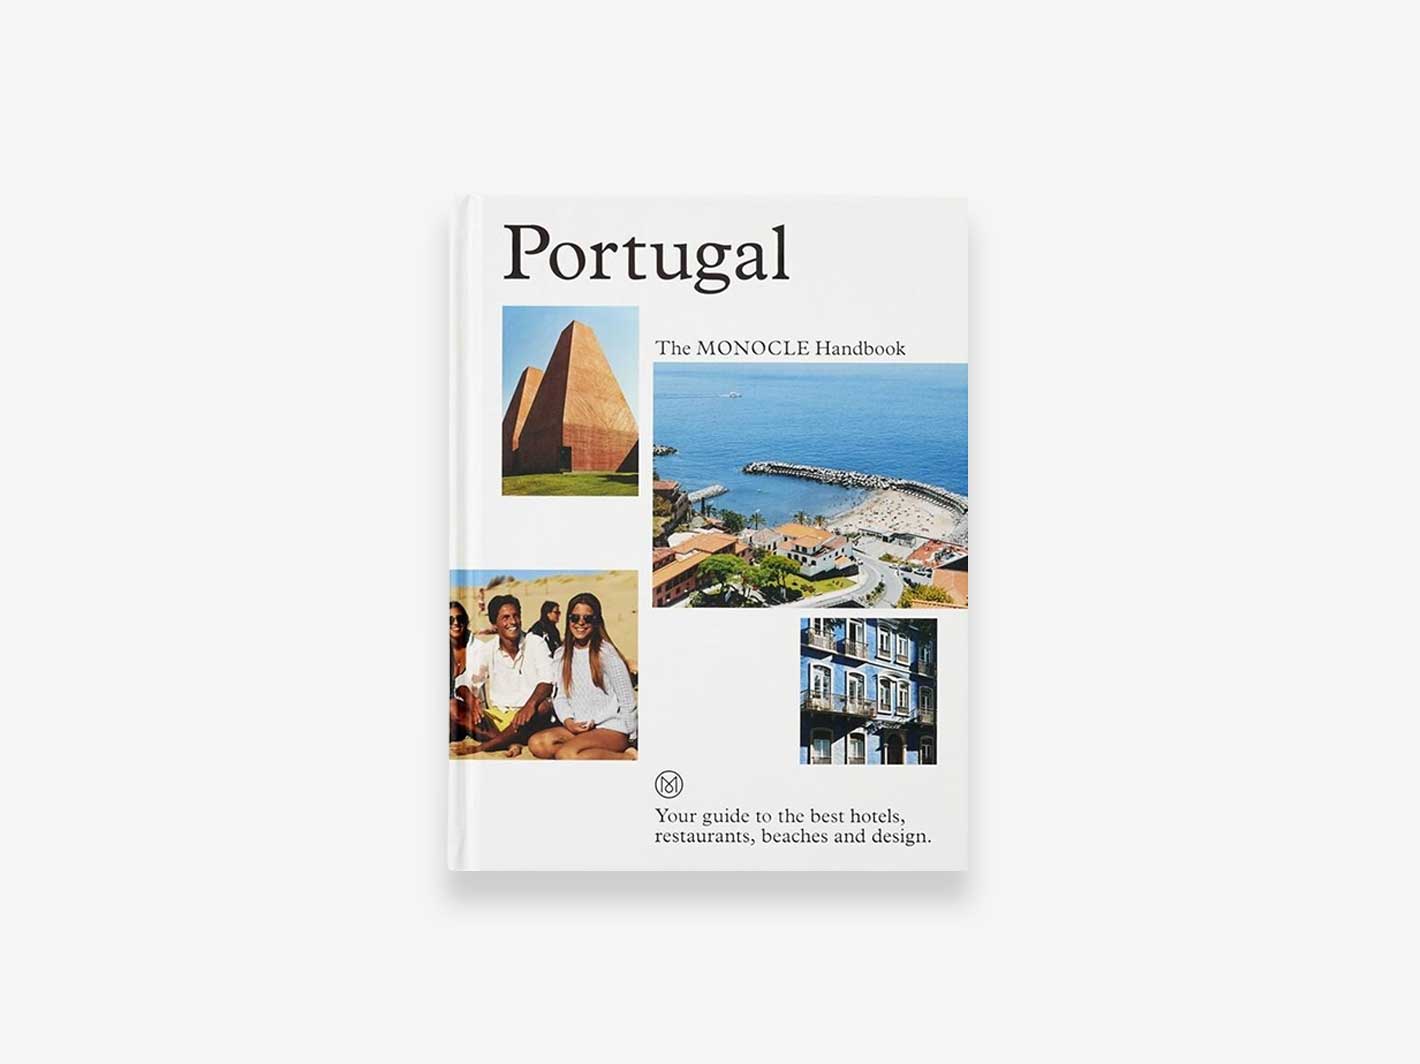 The Monocle Handbook: Portugal